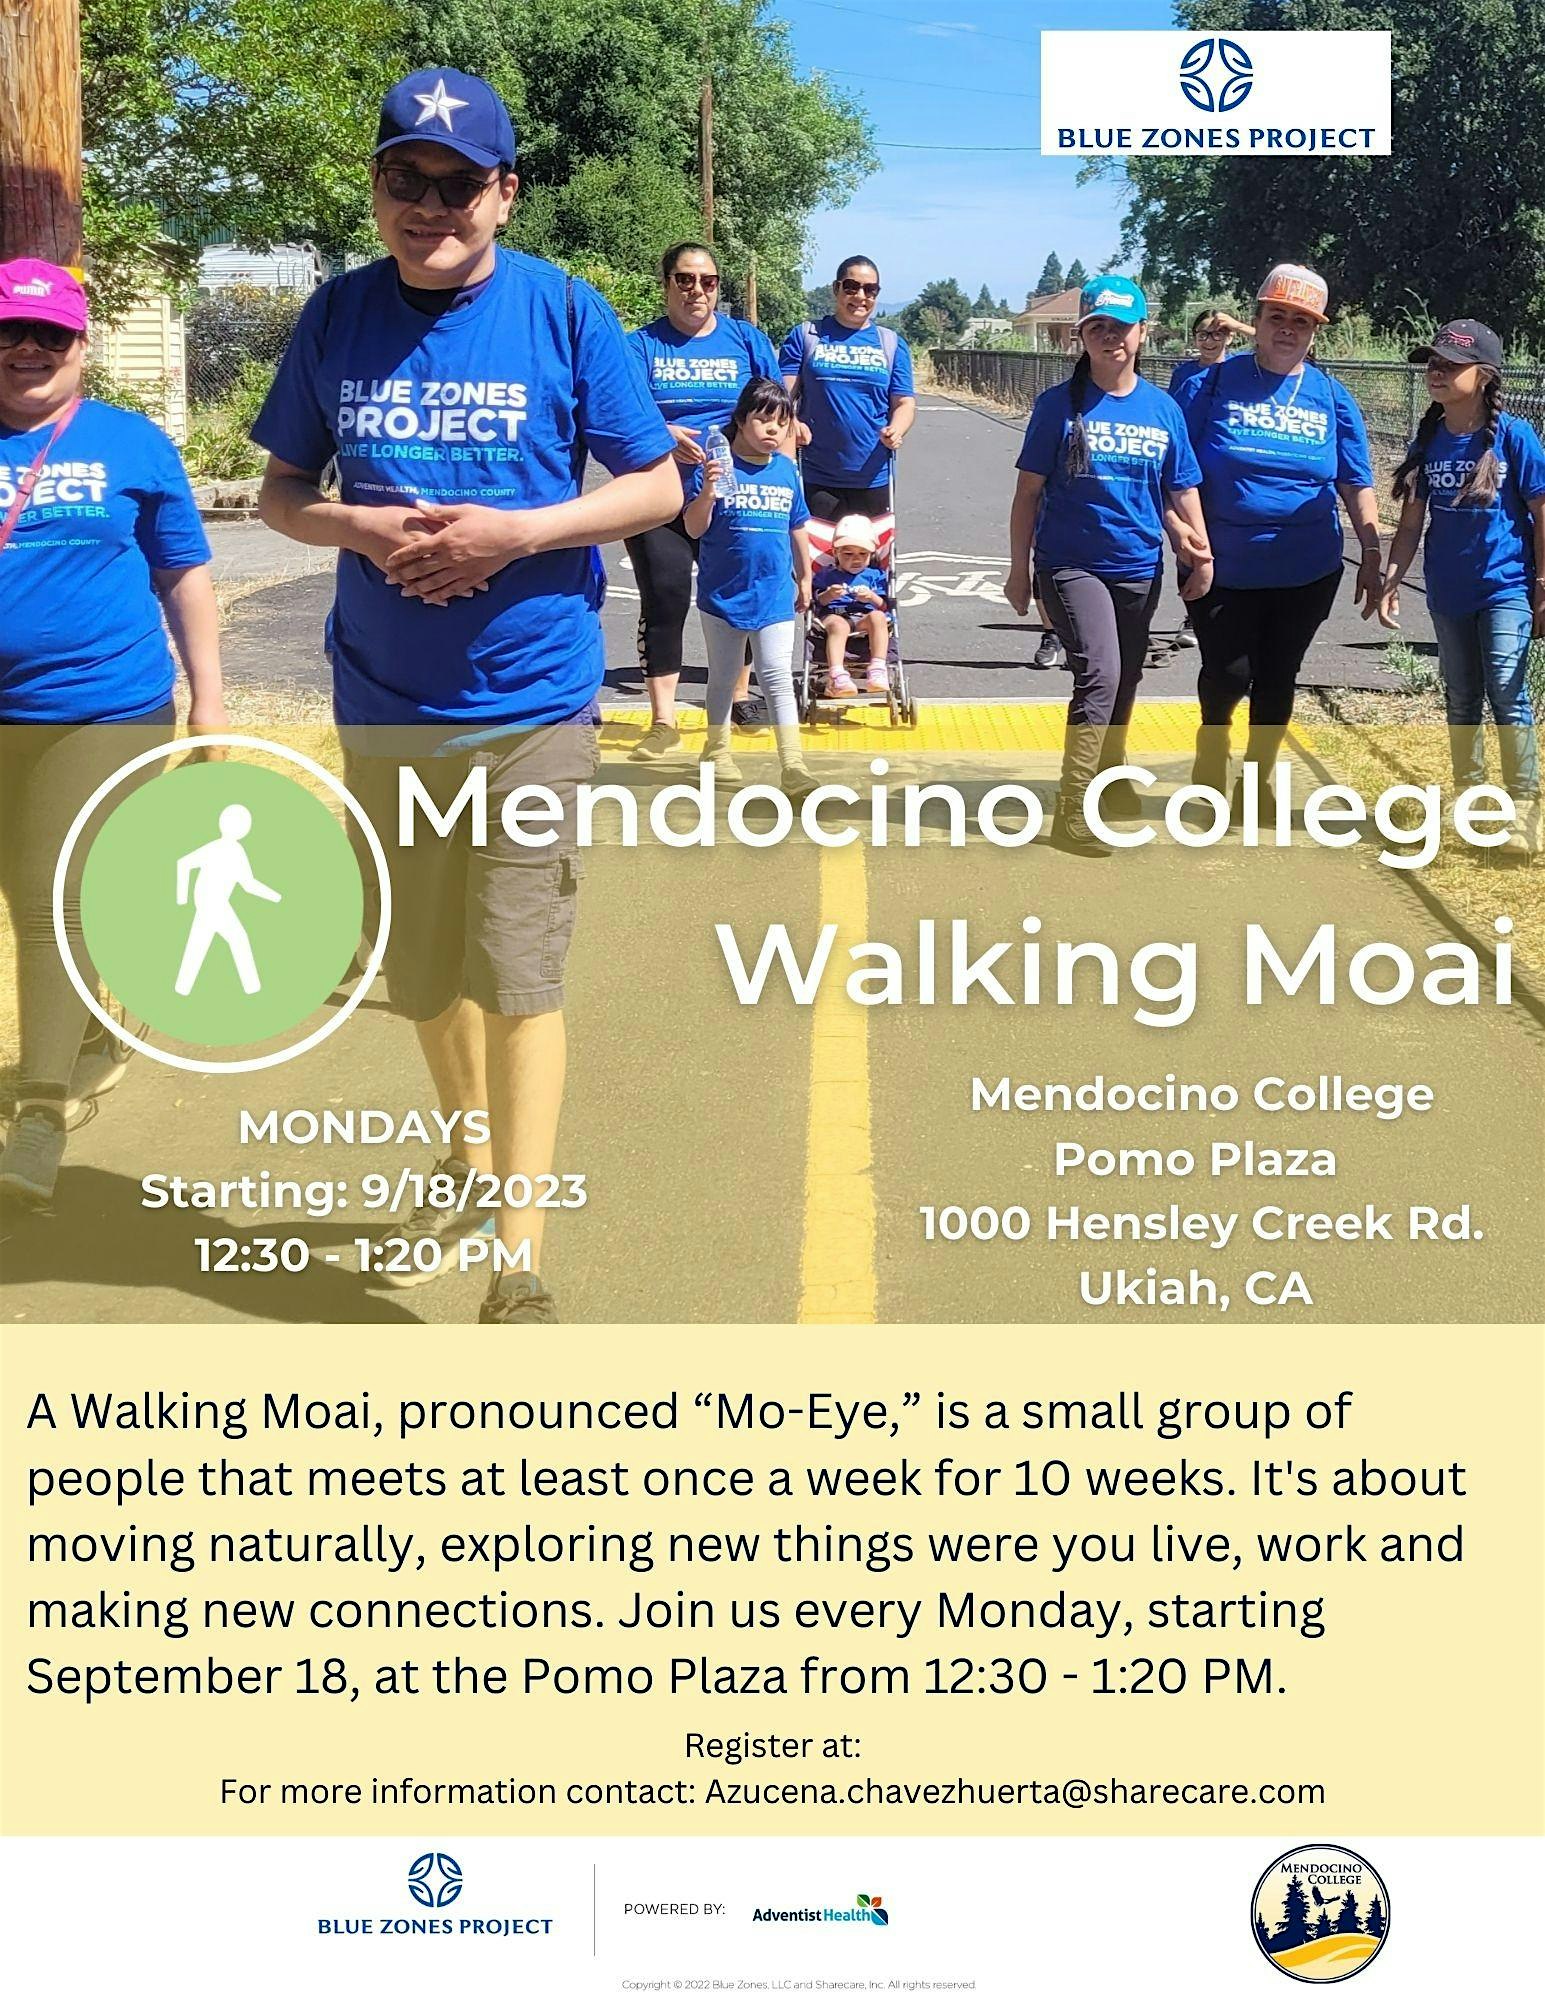 BZP Mendocino County – Mendocino College Walking Moai